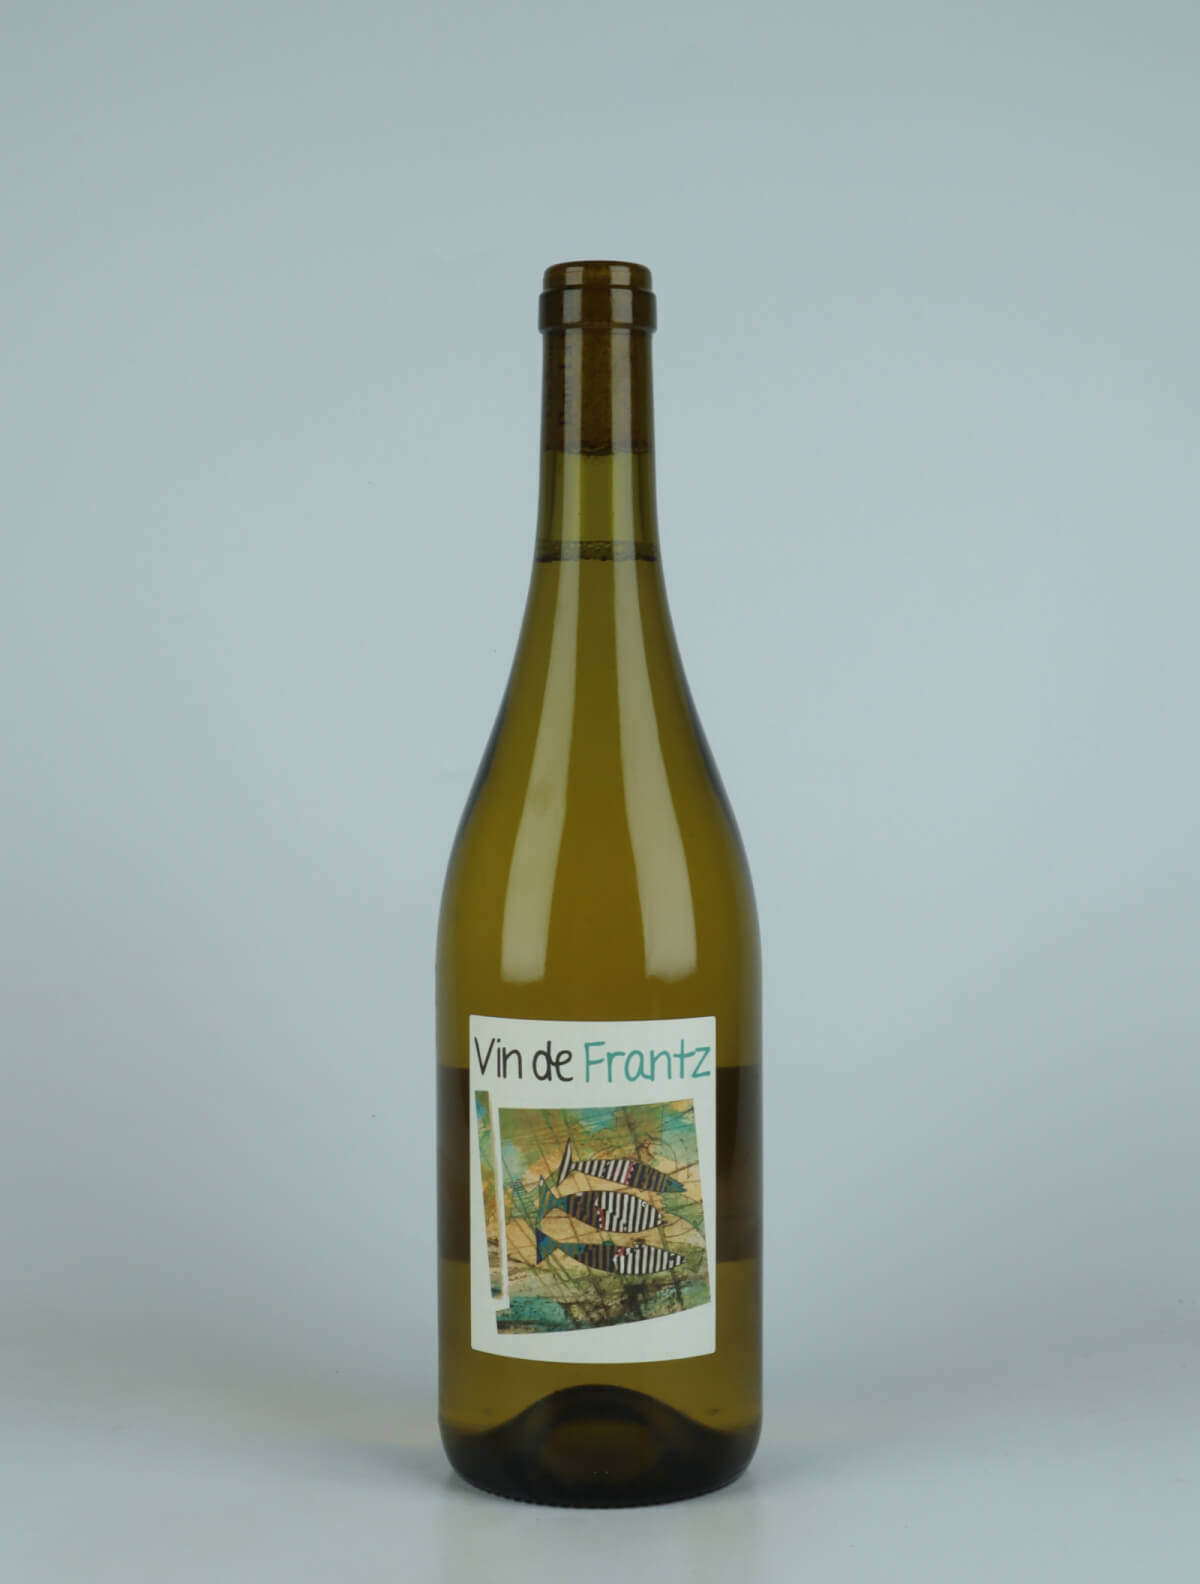 A bottle 2022 Chenin - Vin de Frantz White wine from Frantz Saumon, Loire in France